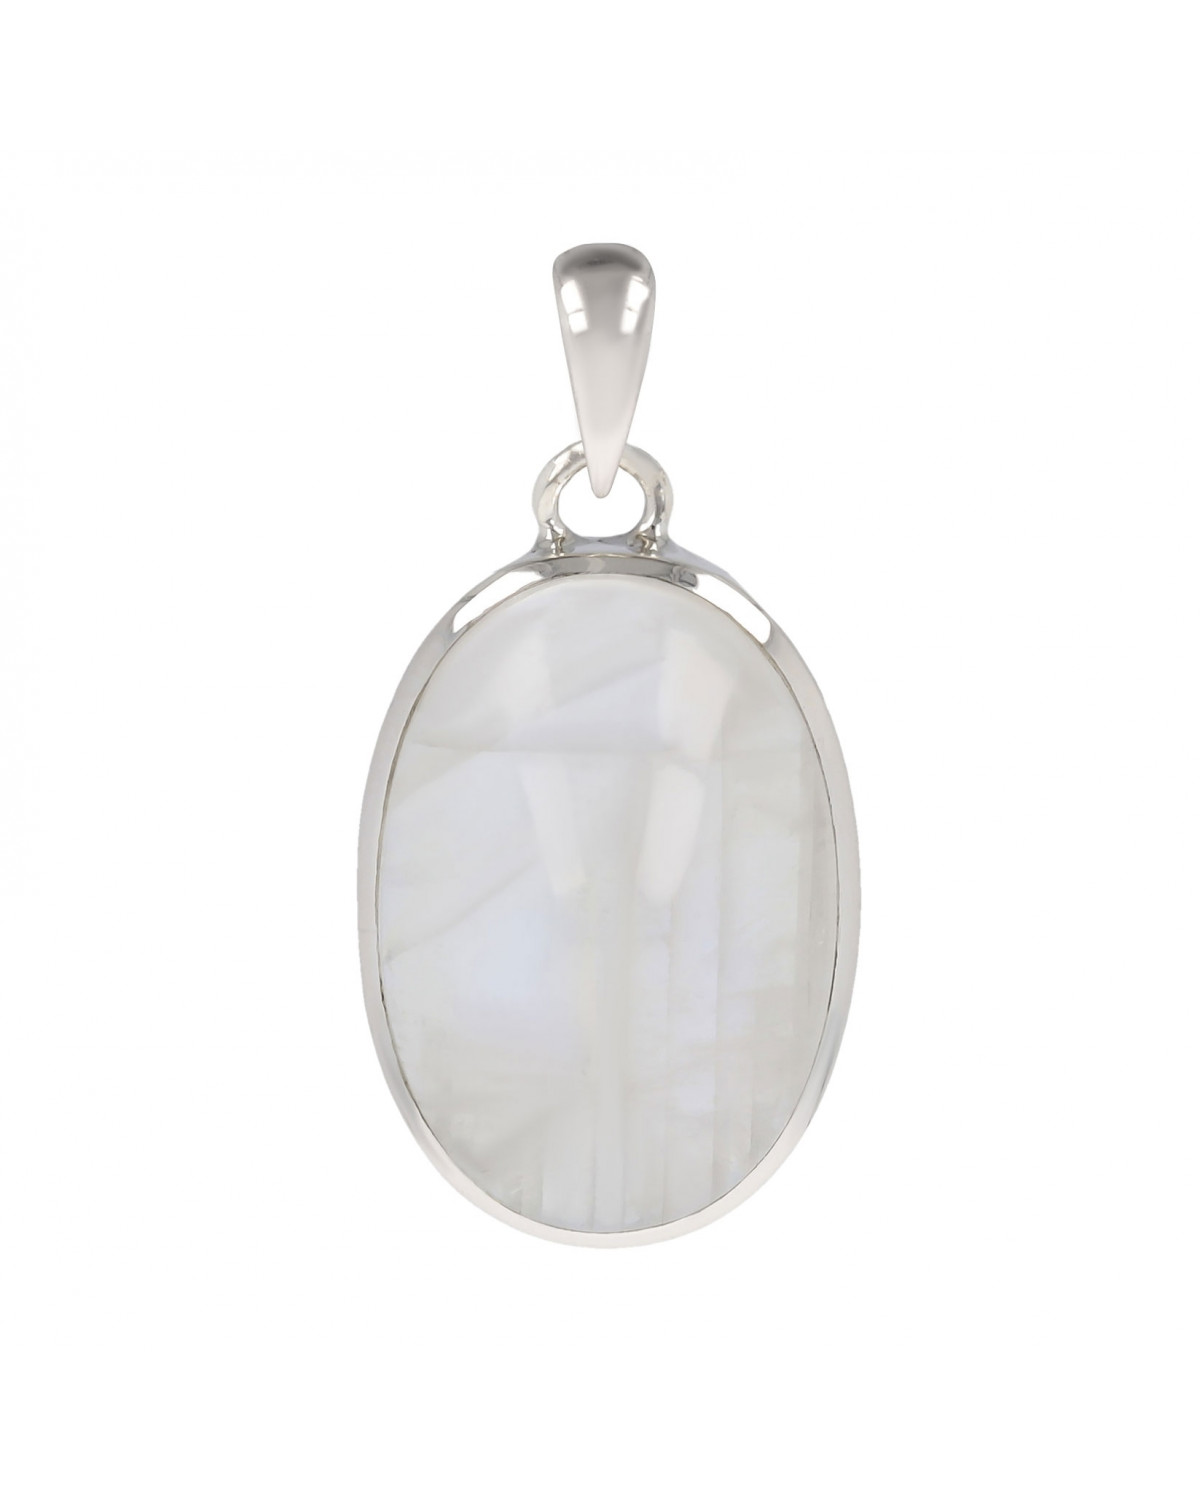 Idée cadeau-Pierre de Lune-Pendentif-blanc- Forme ovale-femme